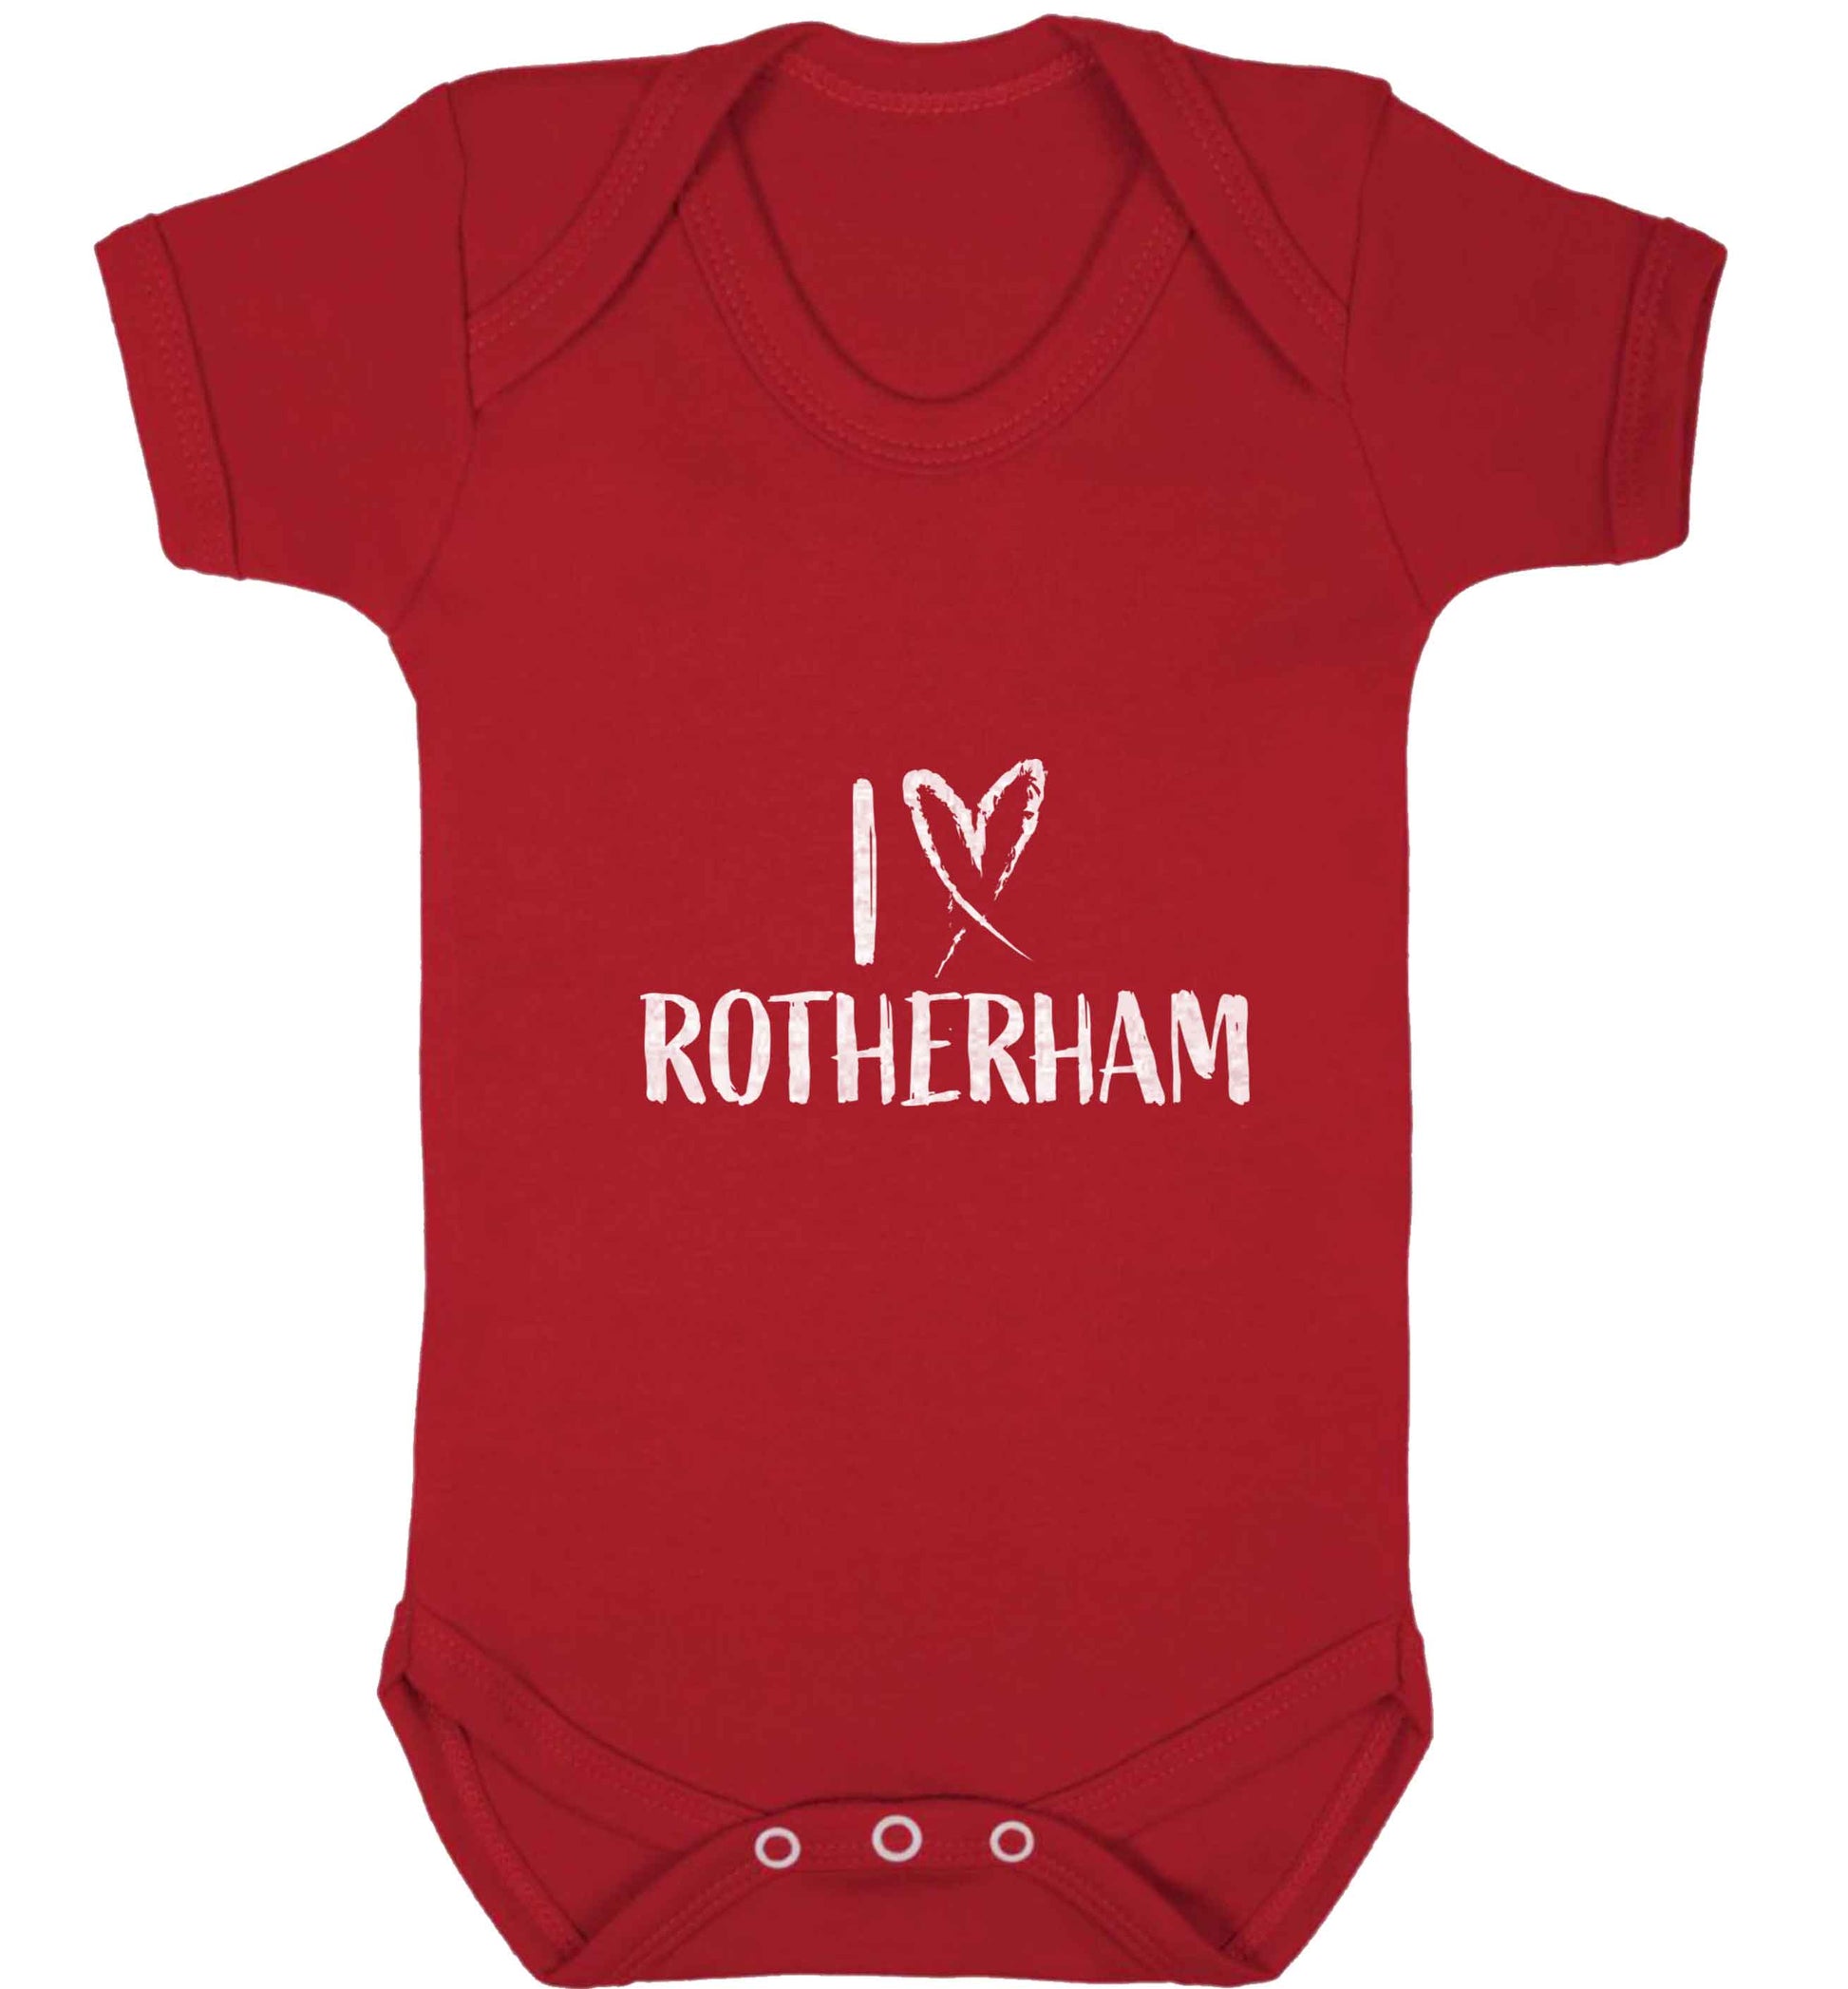 I love Rotherham baby vest red 18-24 months